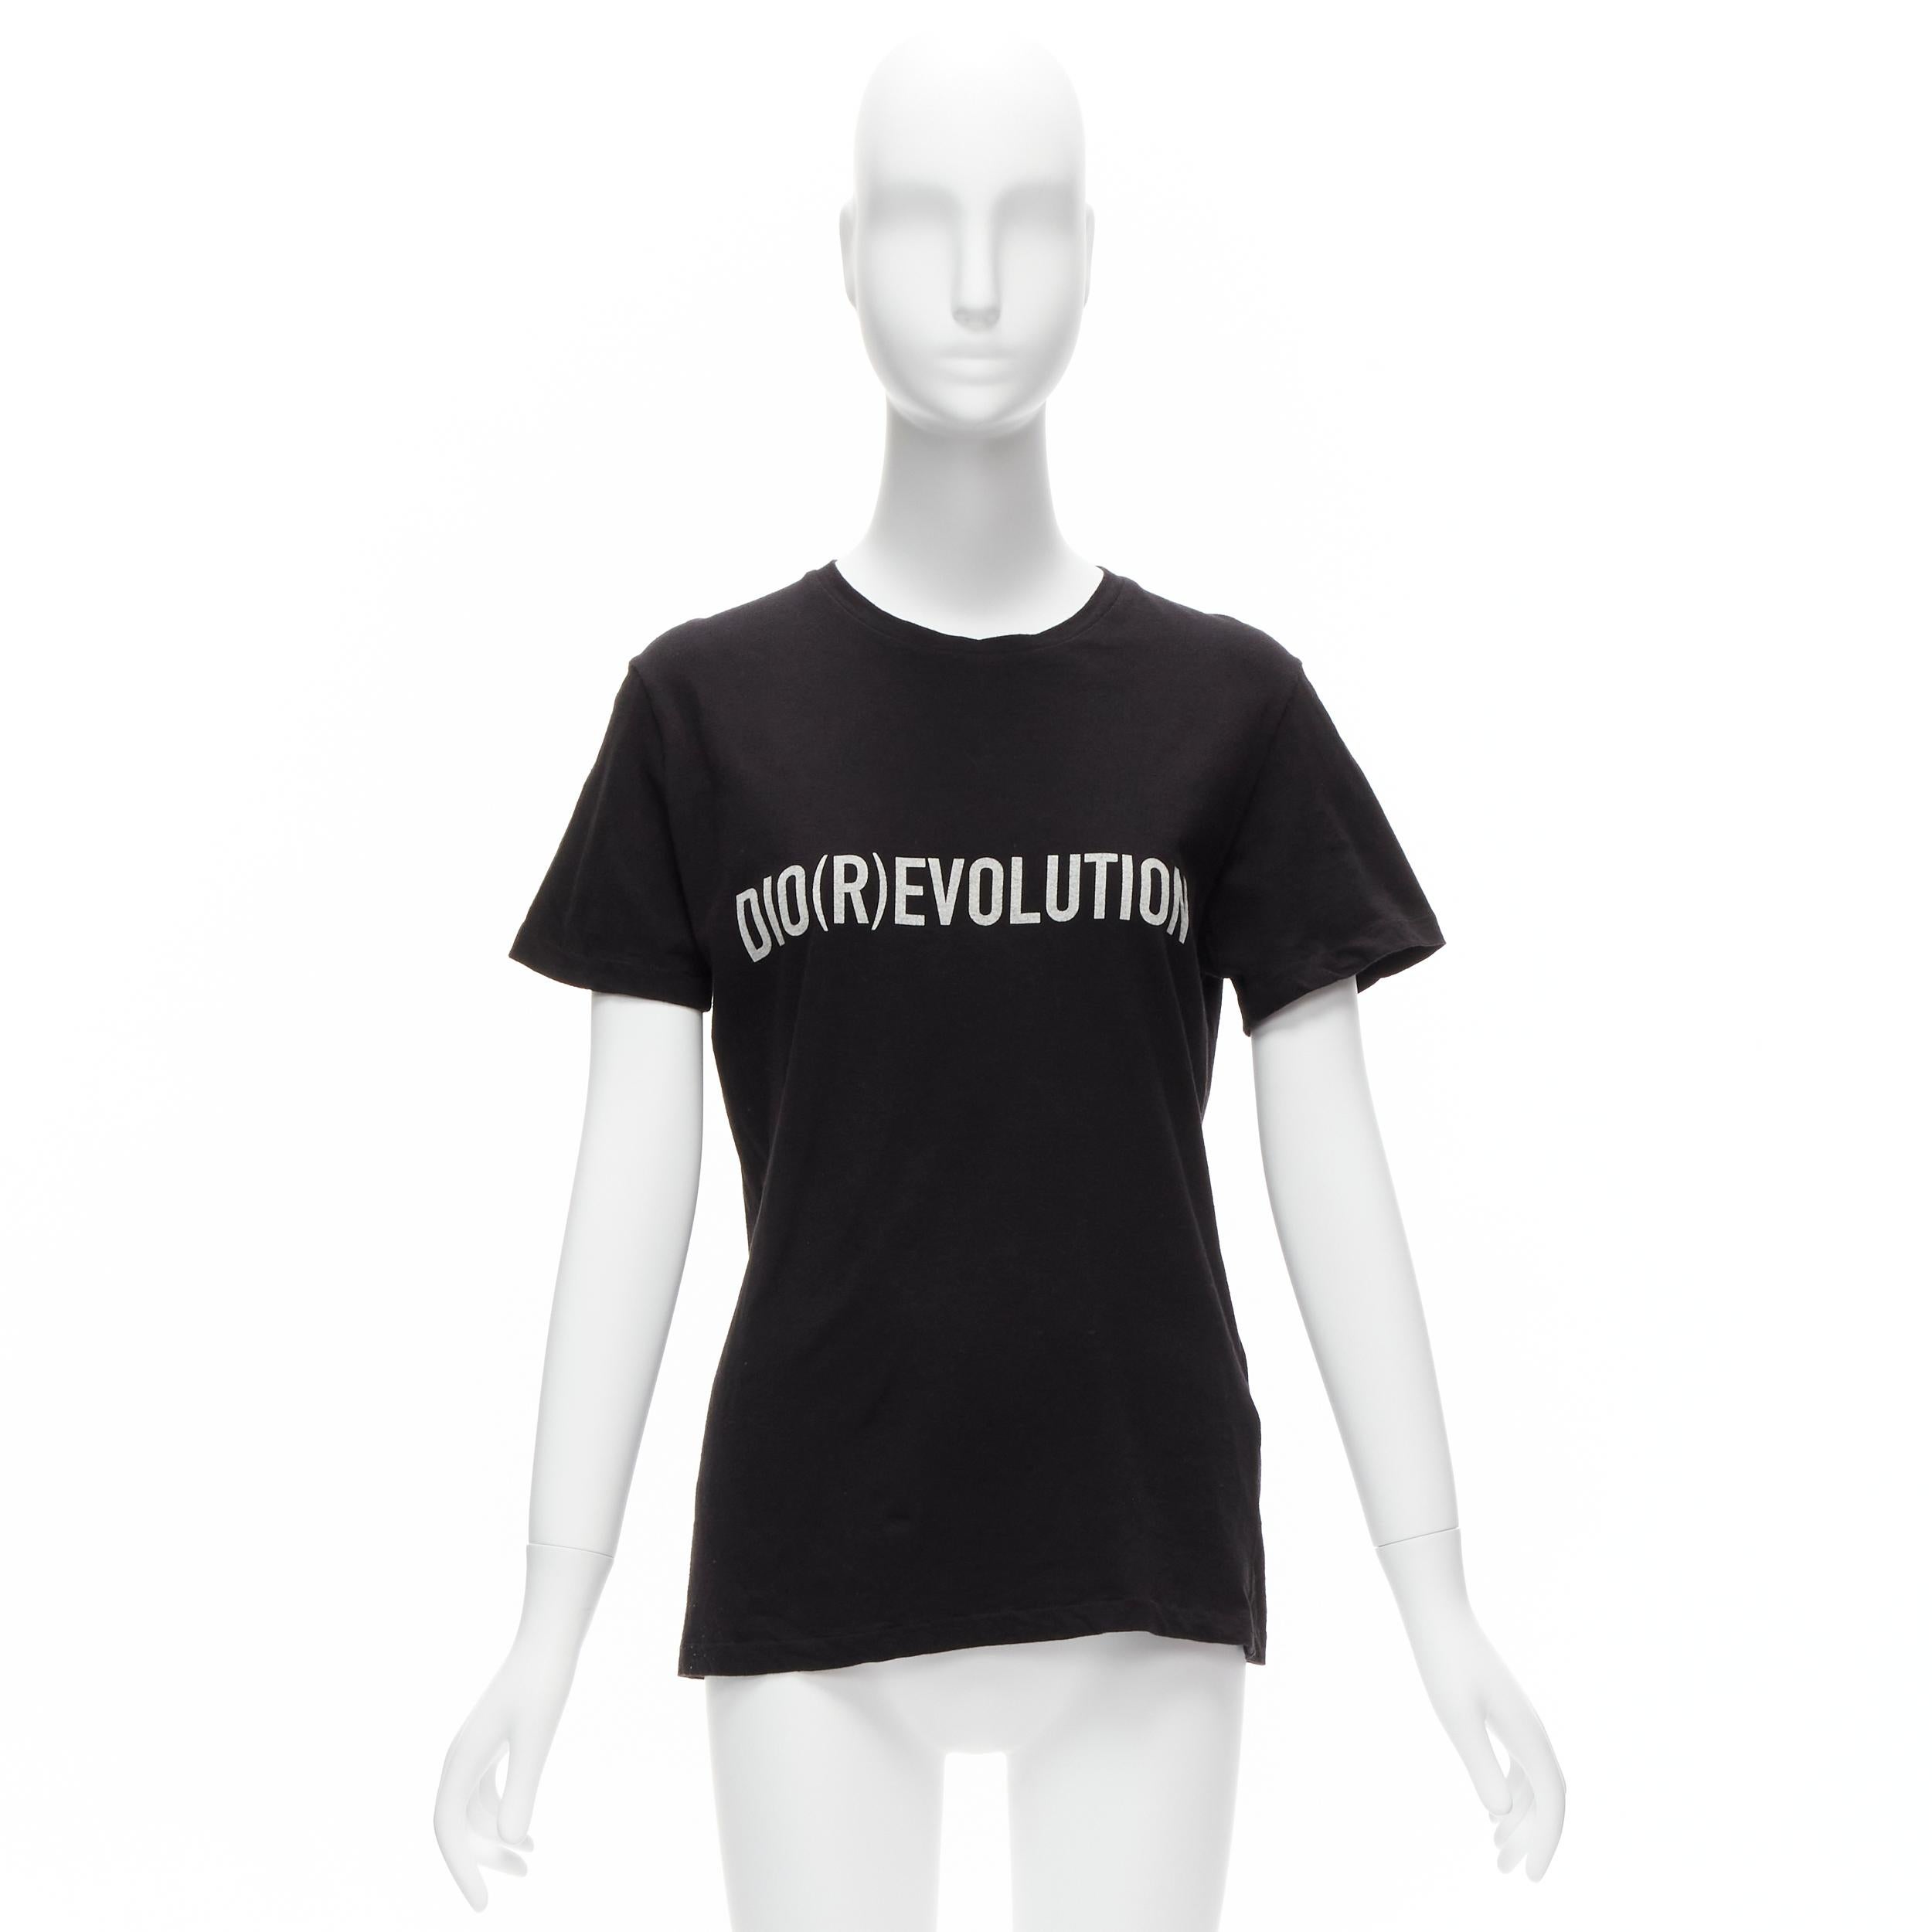 CHRISTIAN DIOR Diorevolution black cotton linen logo print tshirt M For Sale 5